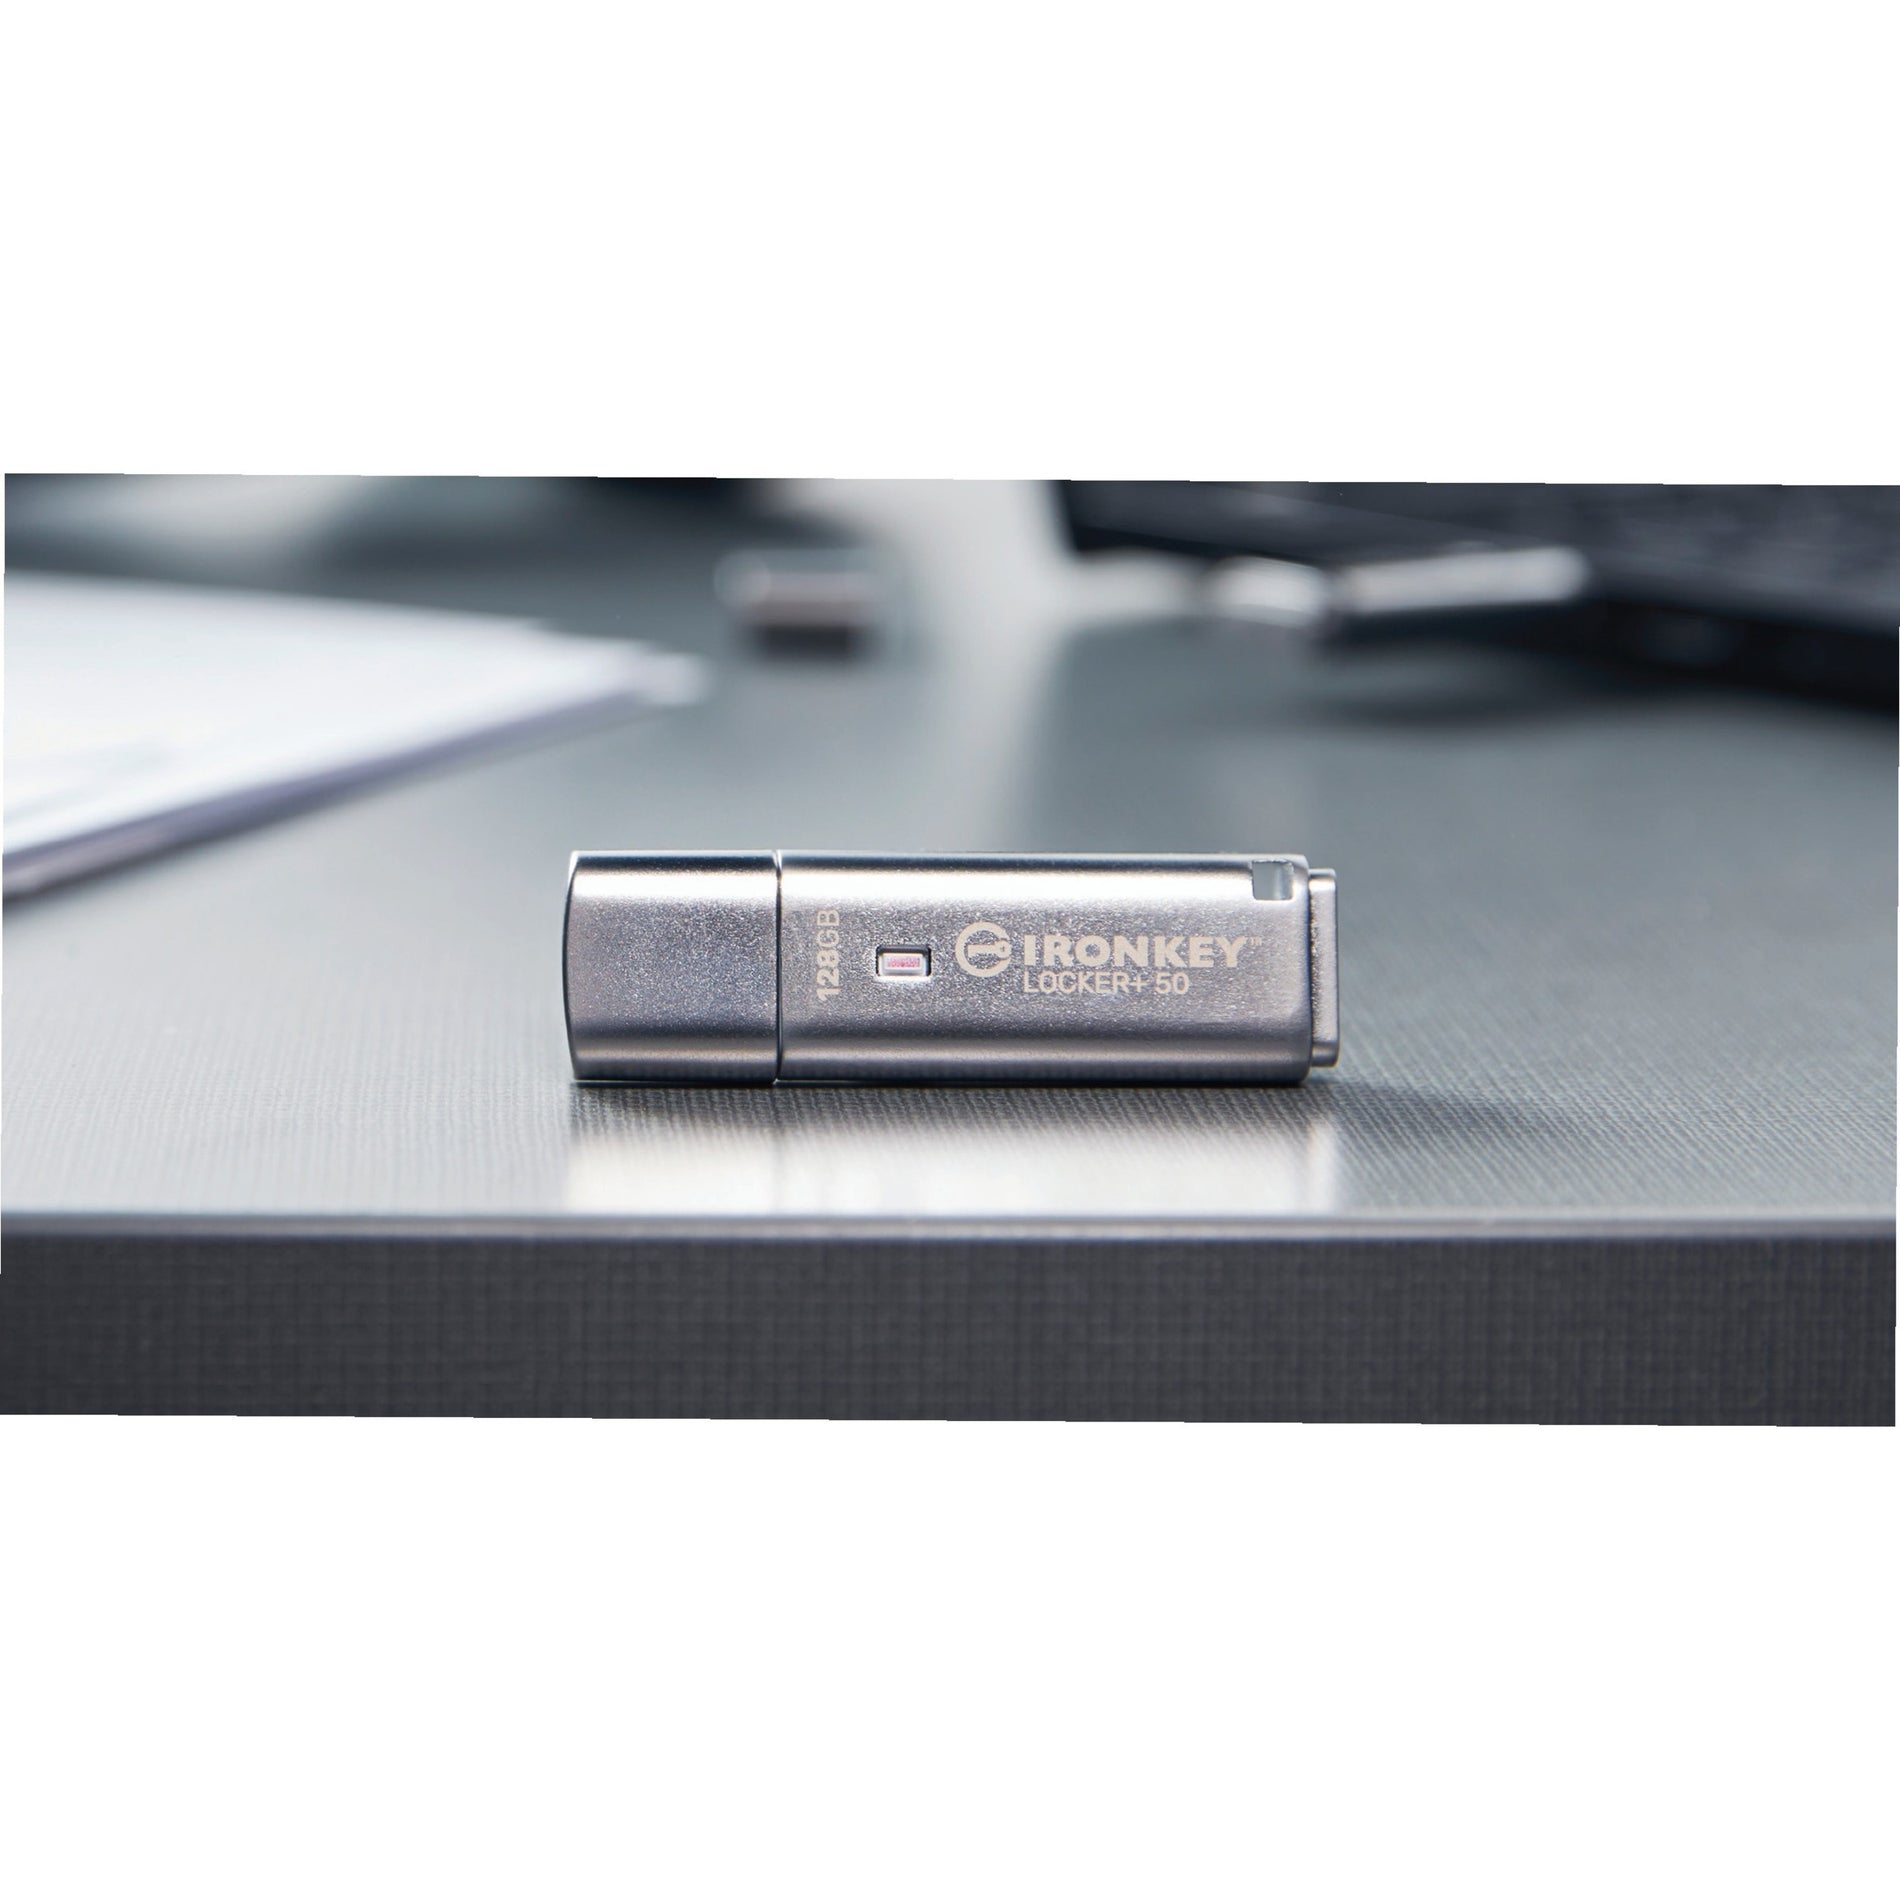 IronKey IKLP50/128GB Locker+ 50 USB Flash Drive, 128GB Storage, Hardware Encryption